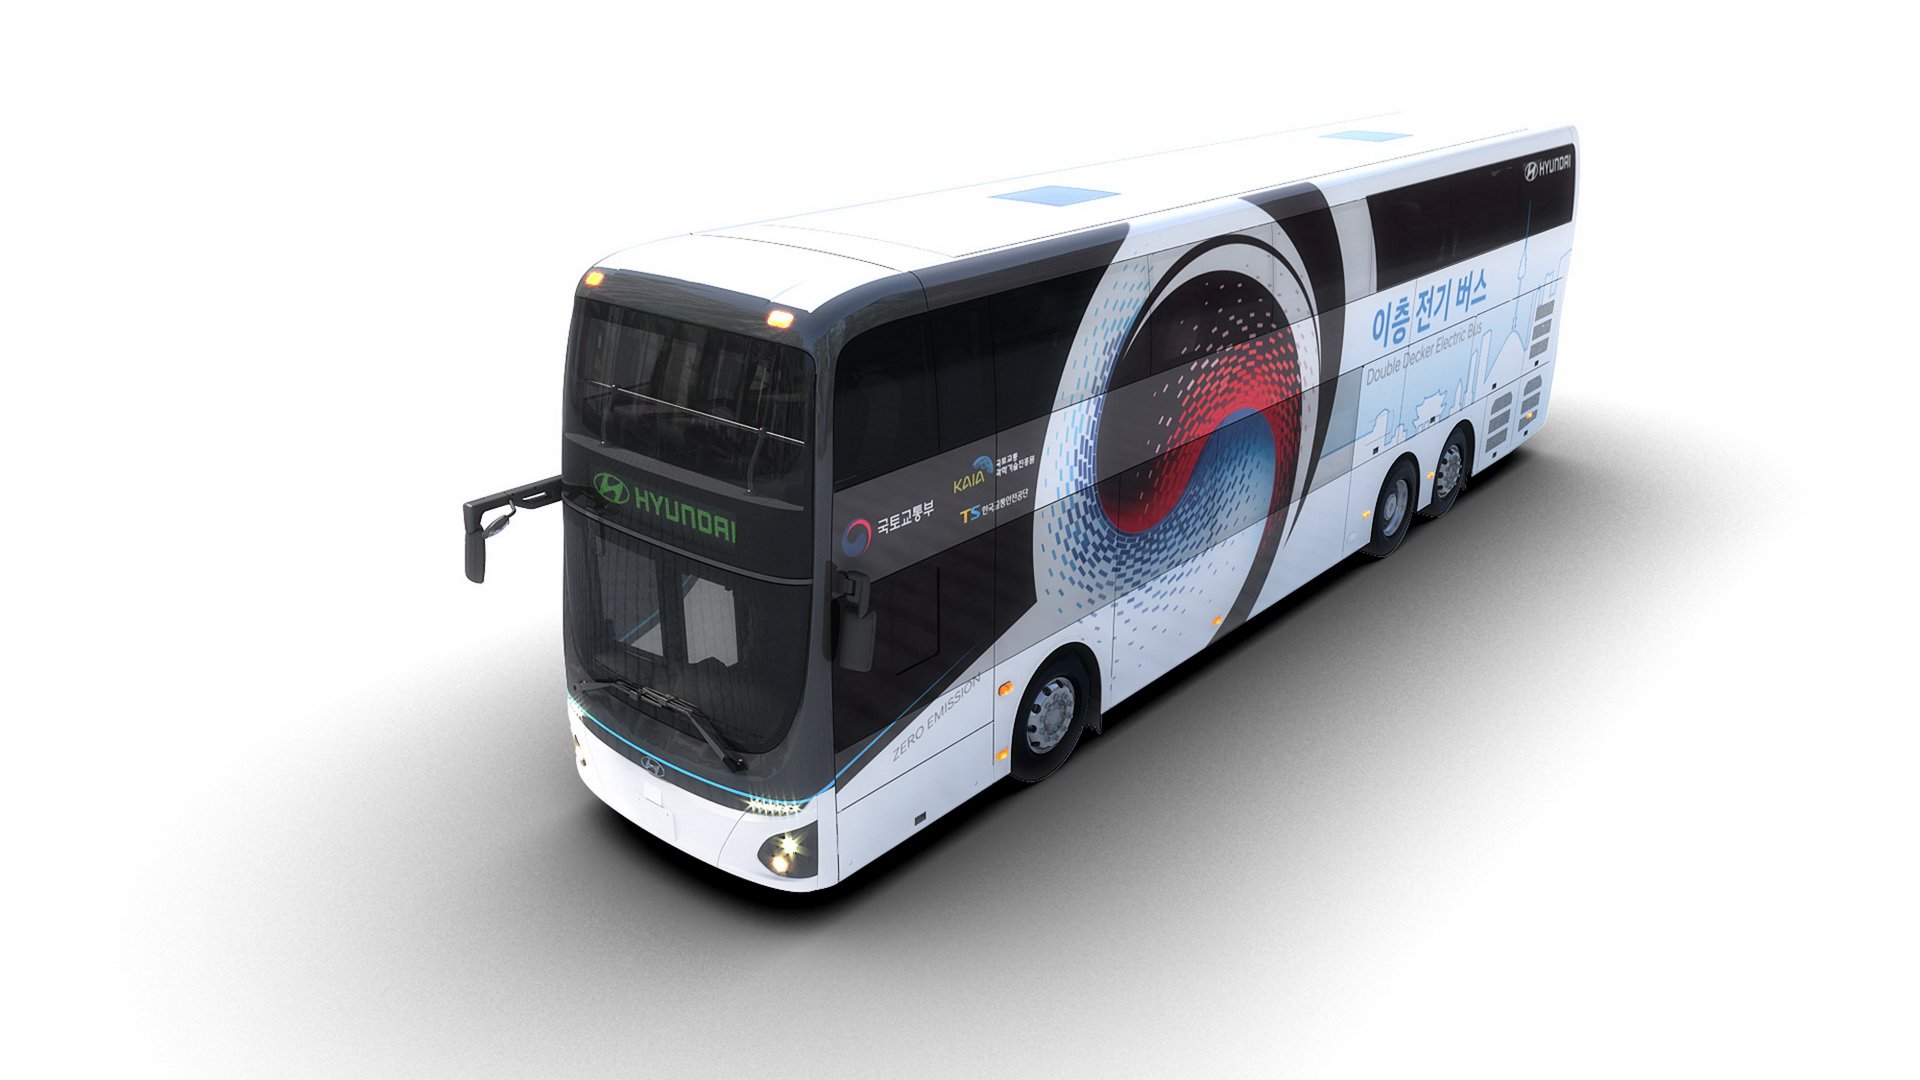 hyundai doubledecker electric bus